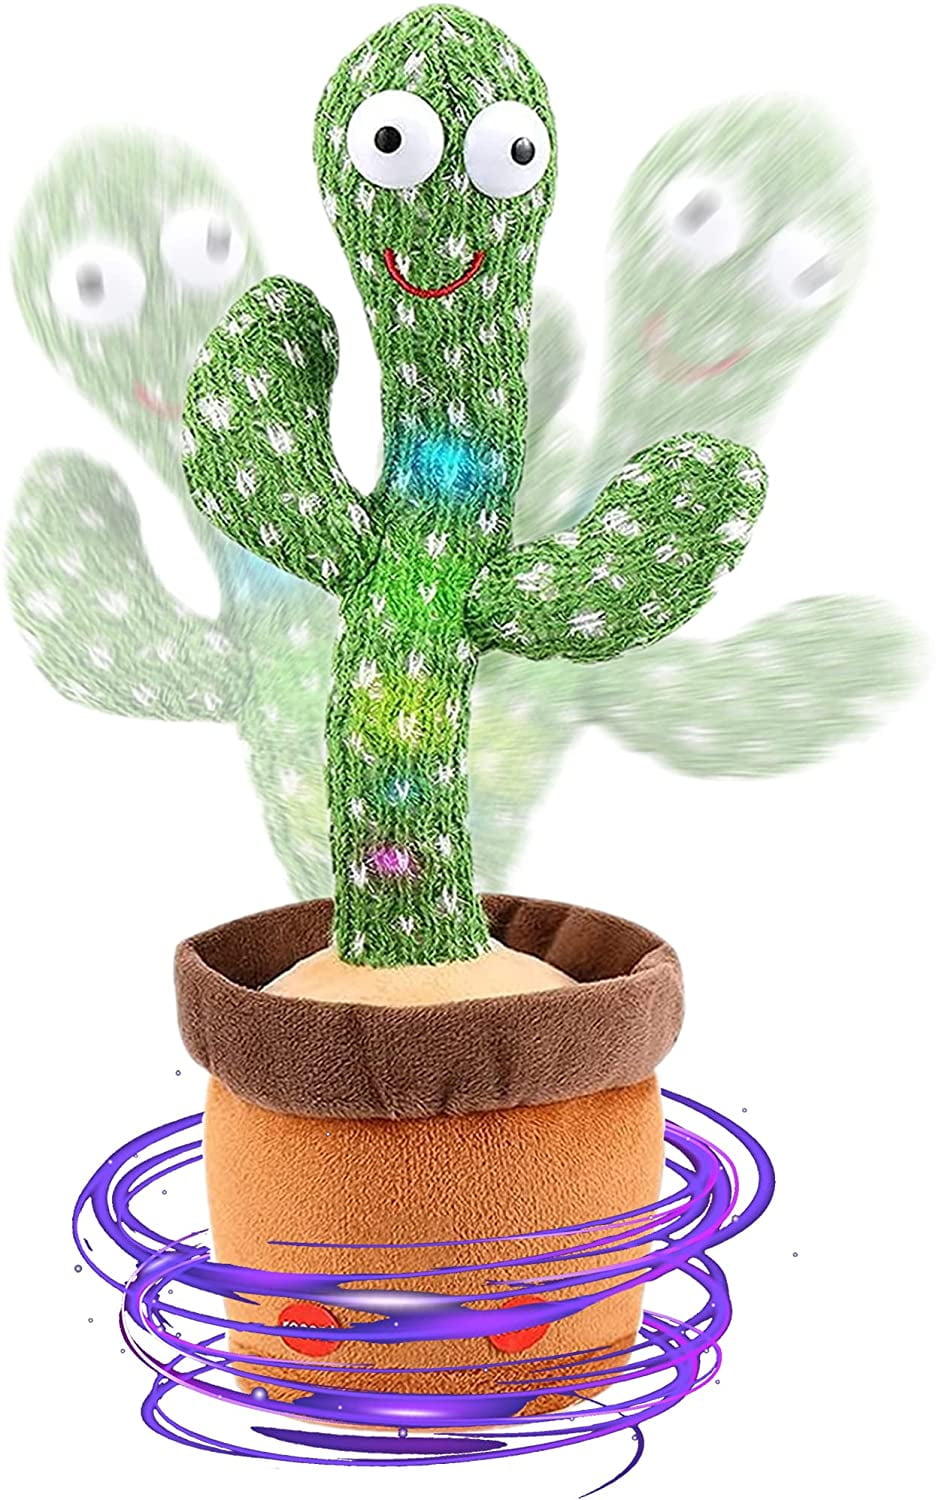 Details about   Dancing Cactus Plush Toys Home Decor NH 